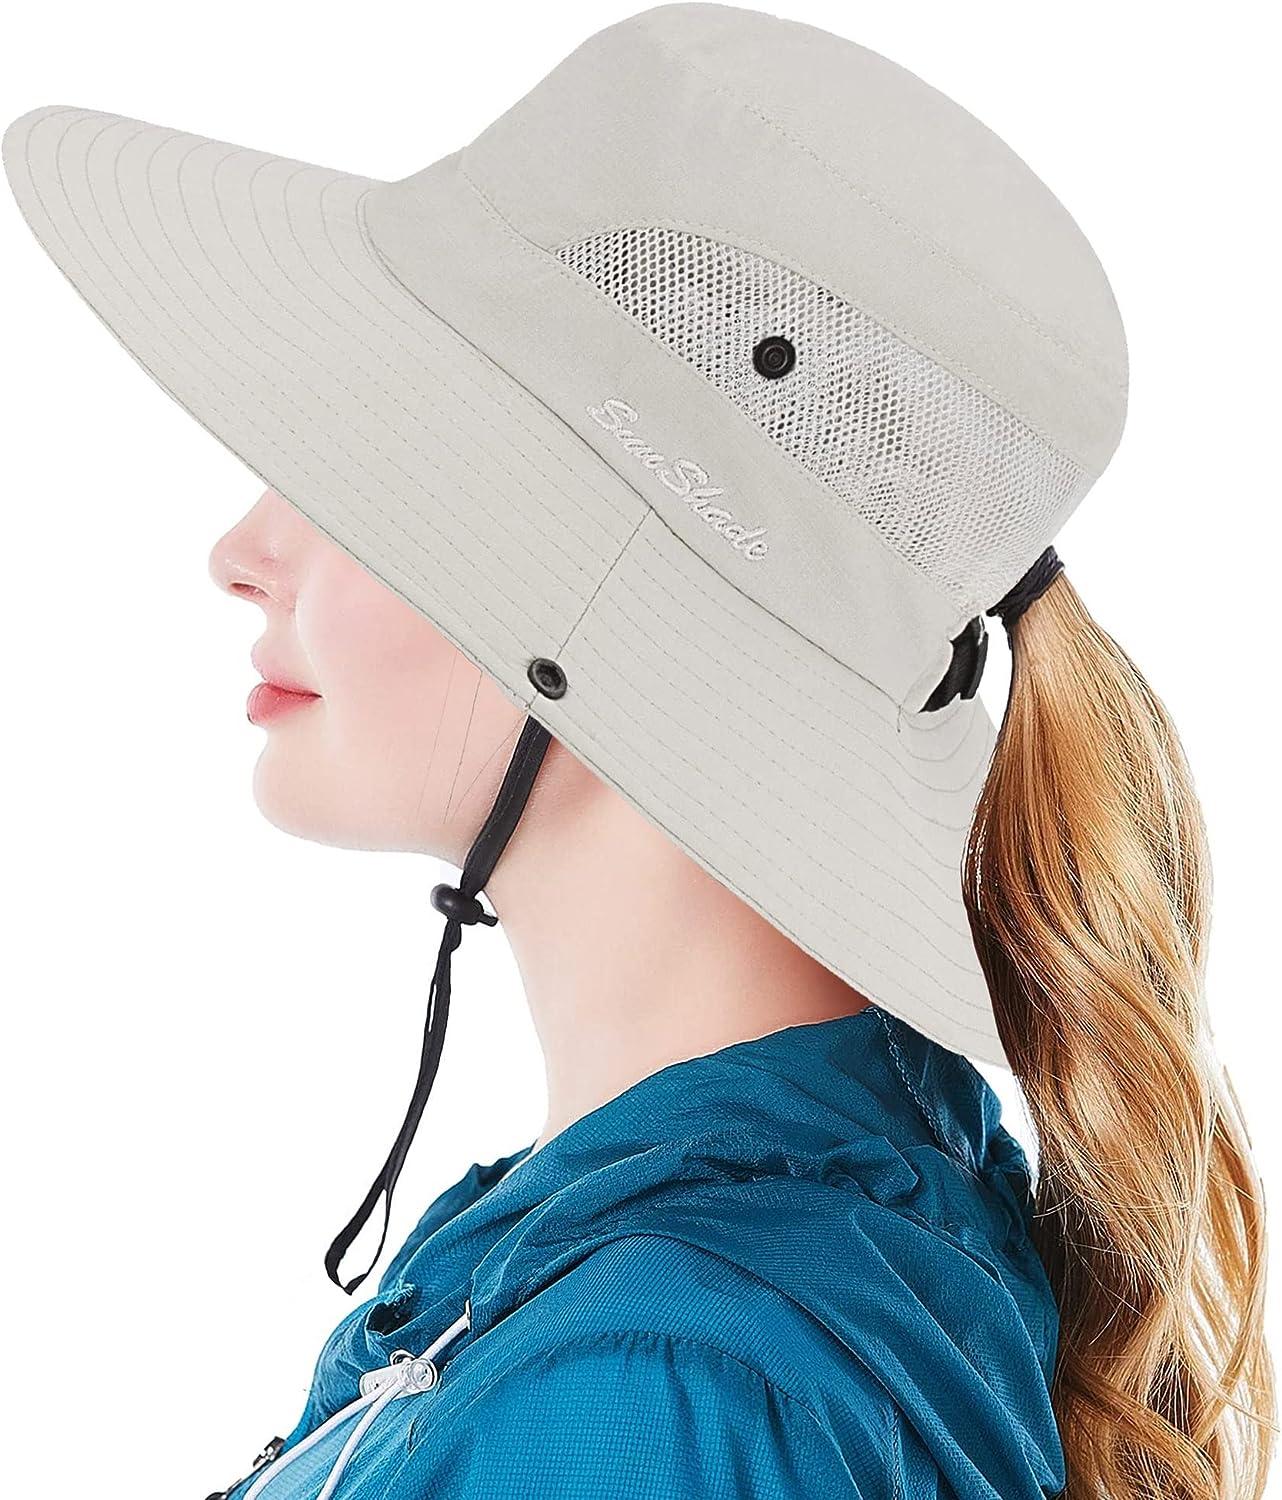  Sun Hats Wide Brim Beach Fishing Hat Adjustable